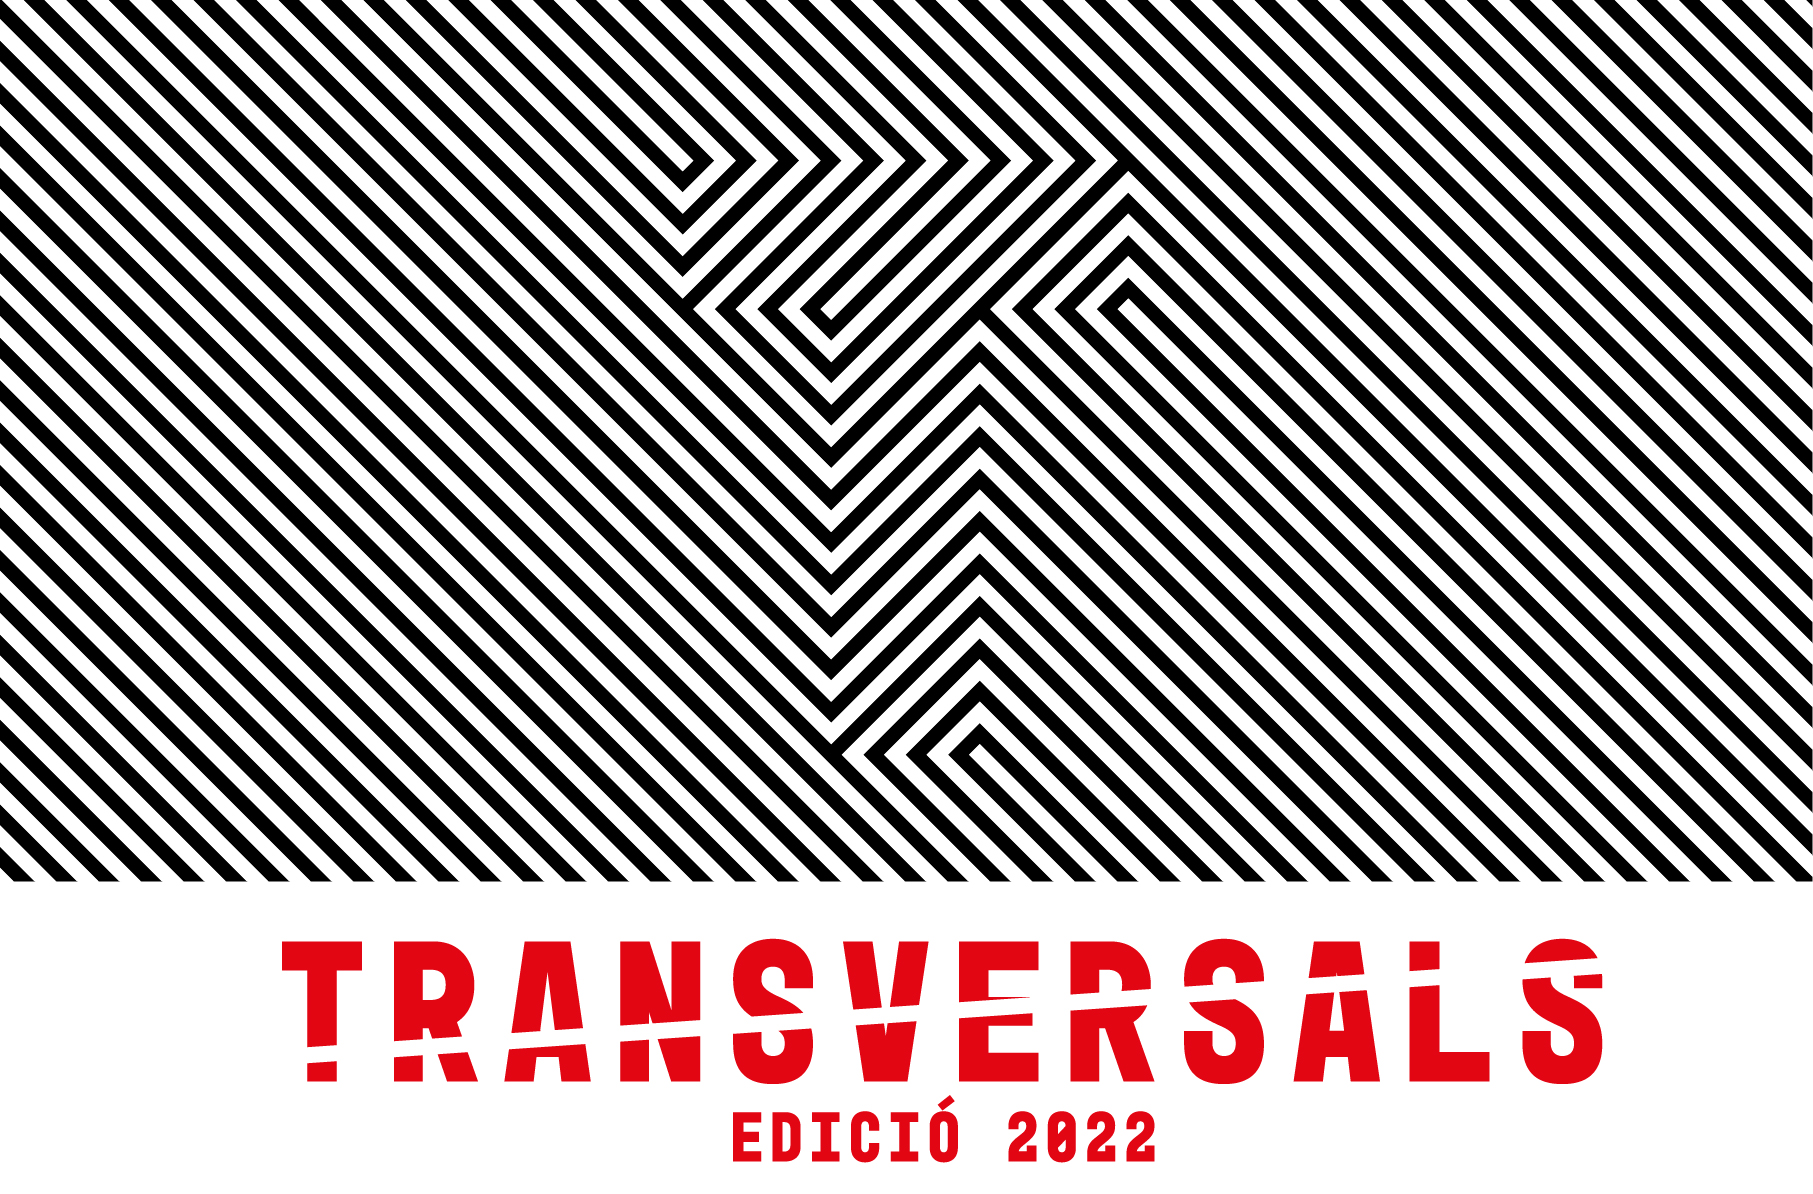 transversals-edicio-2022